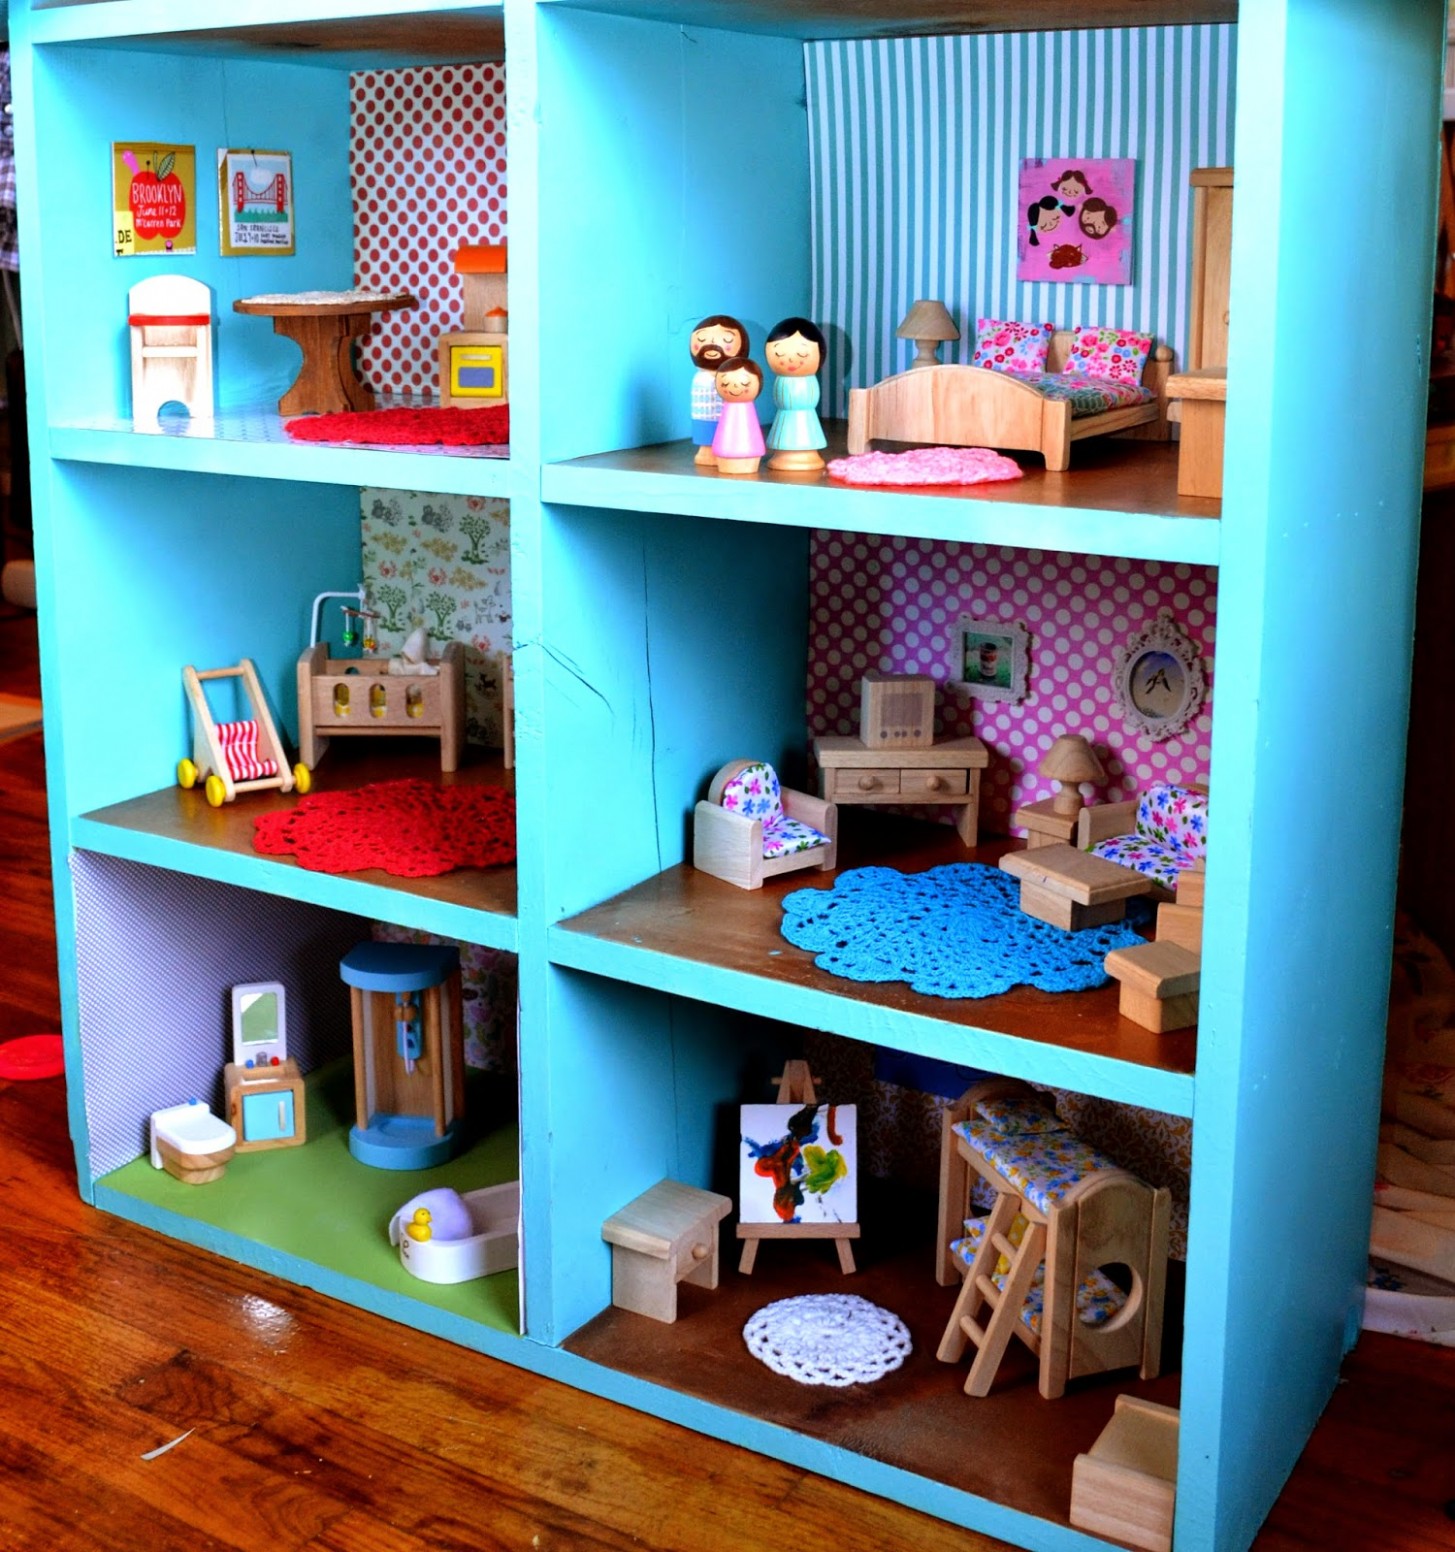 Good Times With 10 Bears Studio: Dollhouse Makeover! Hobby Lobby Miniature Dollhouse Furniture